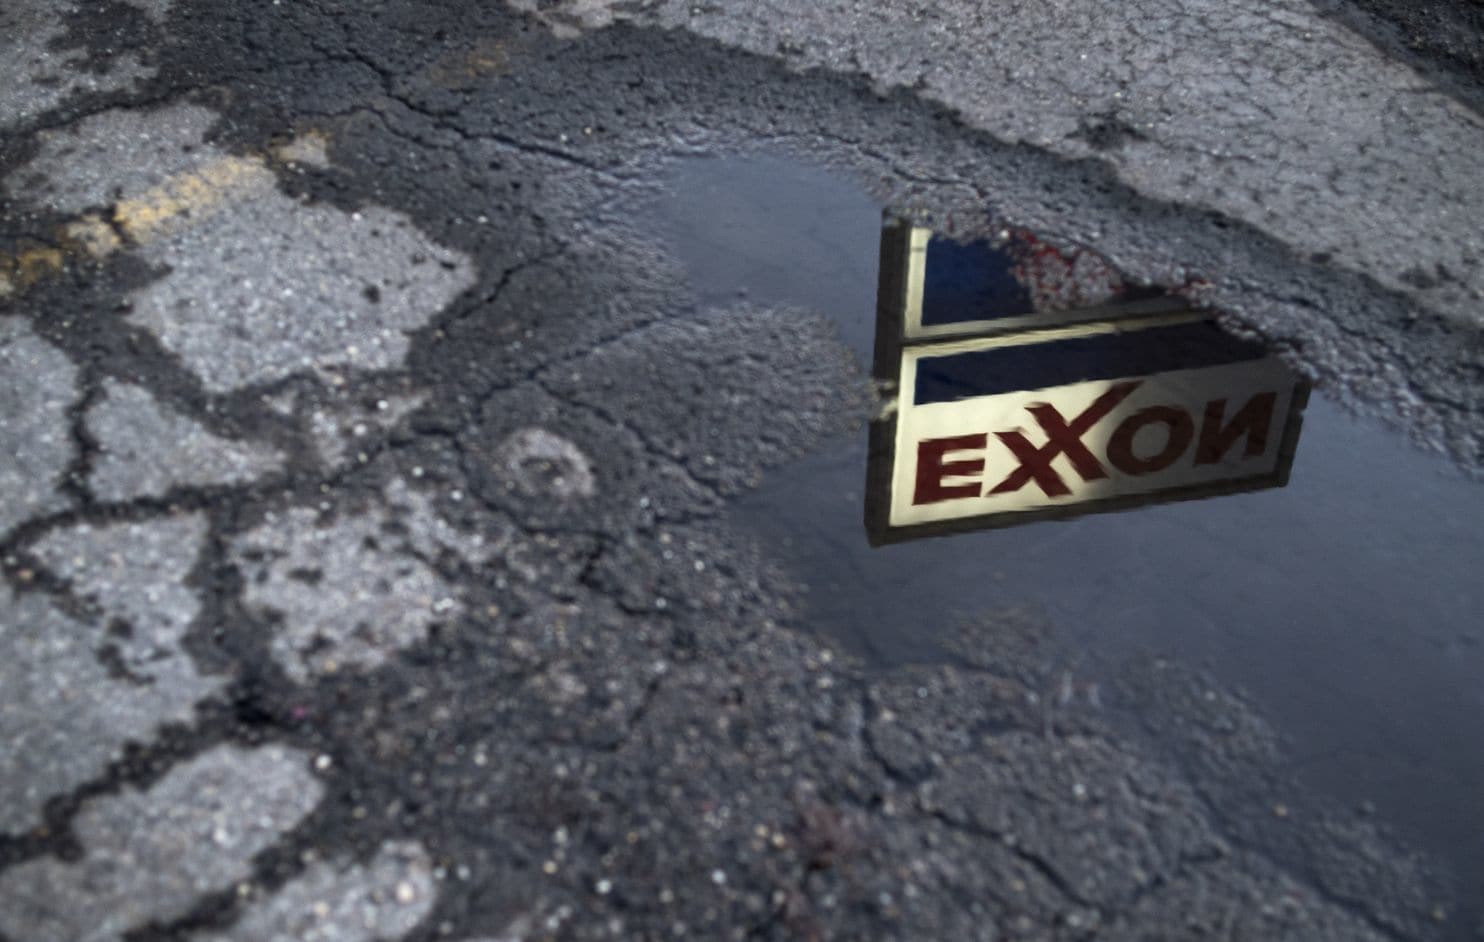 Old Exxon Logo - Why Venezuela Is Clashing With Its Old Foe Exxon Again